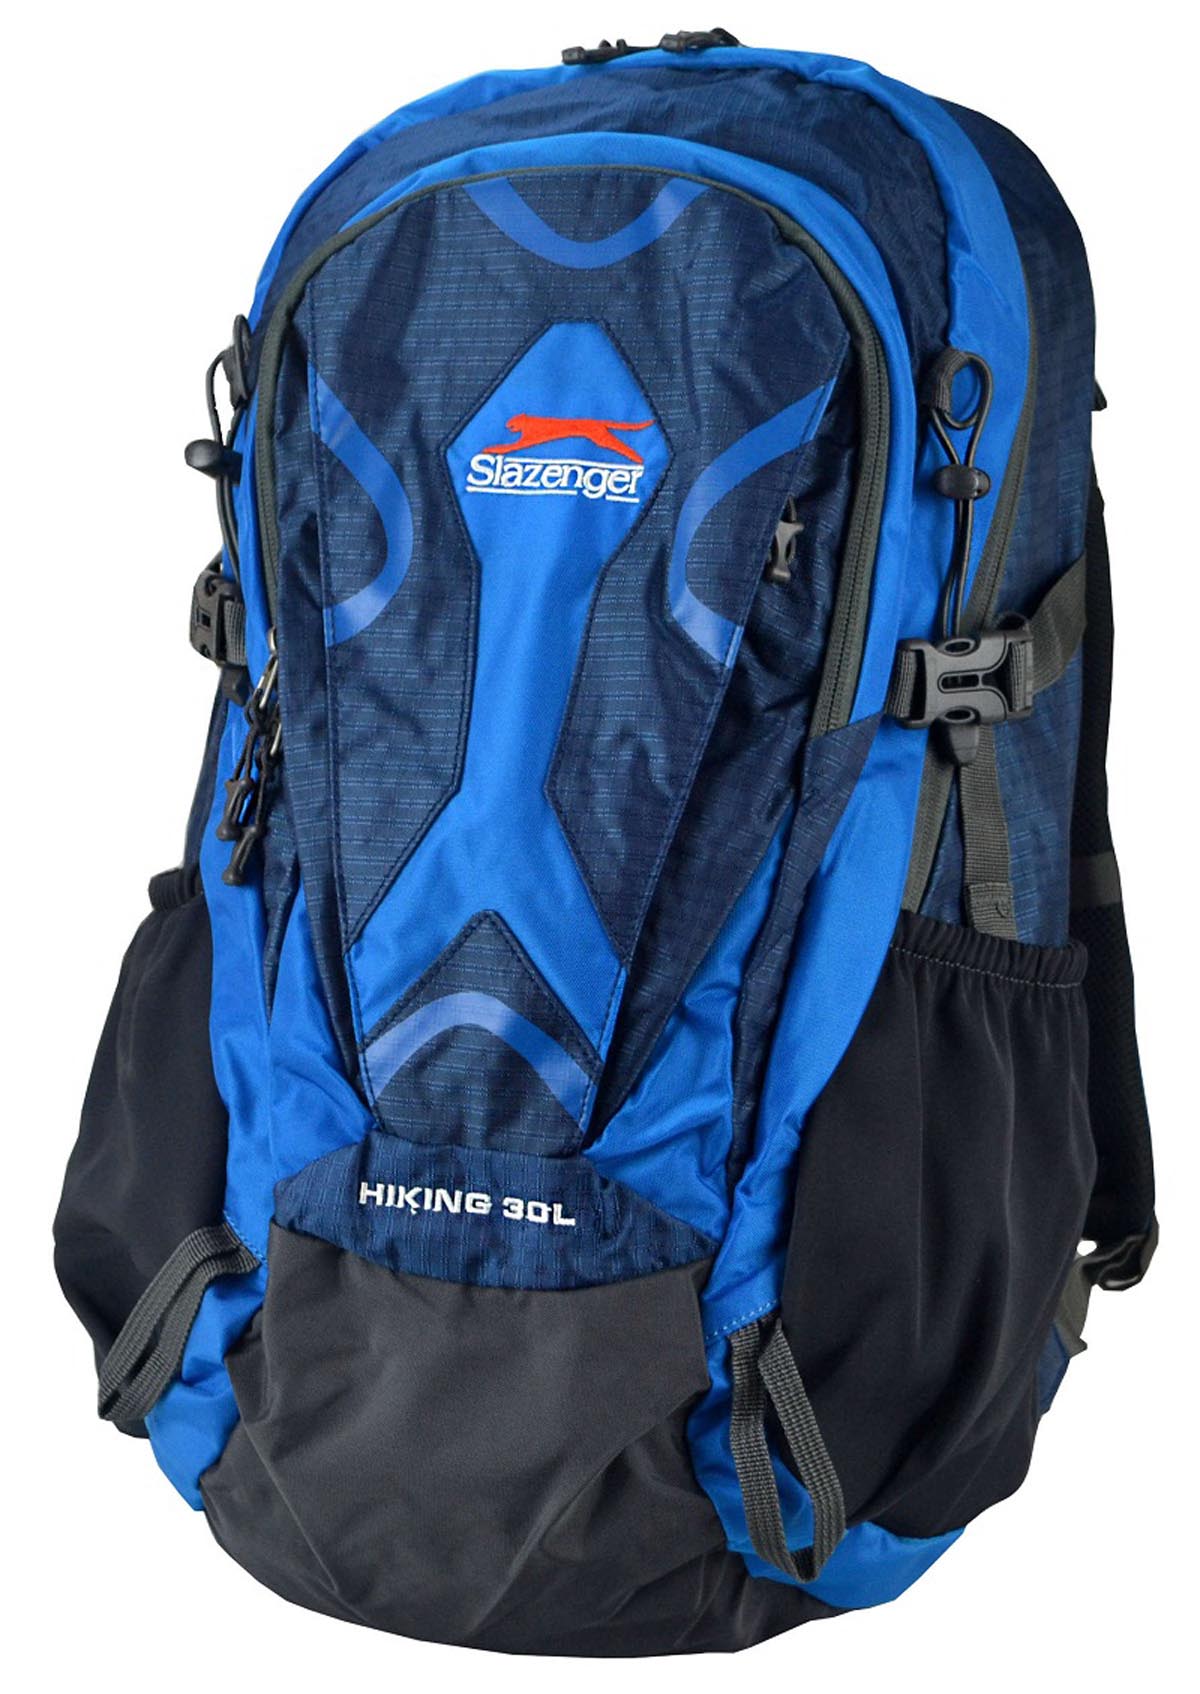 ODzgR-Slazenger-Hiking-Backpack-30L To Choose The Best Hiking Backpack, Just Follow These Steps